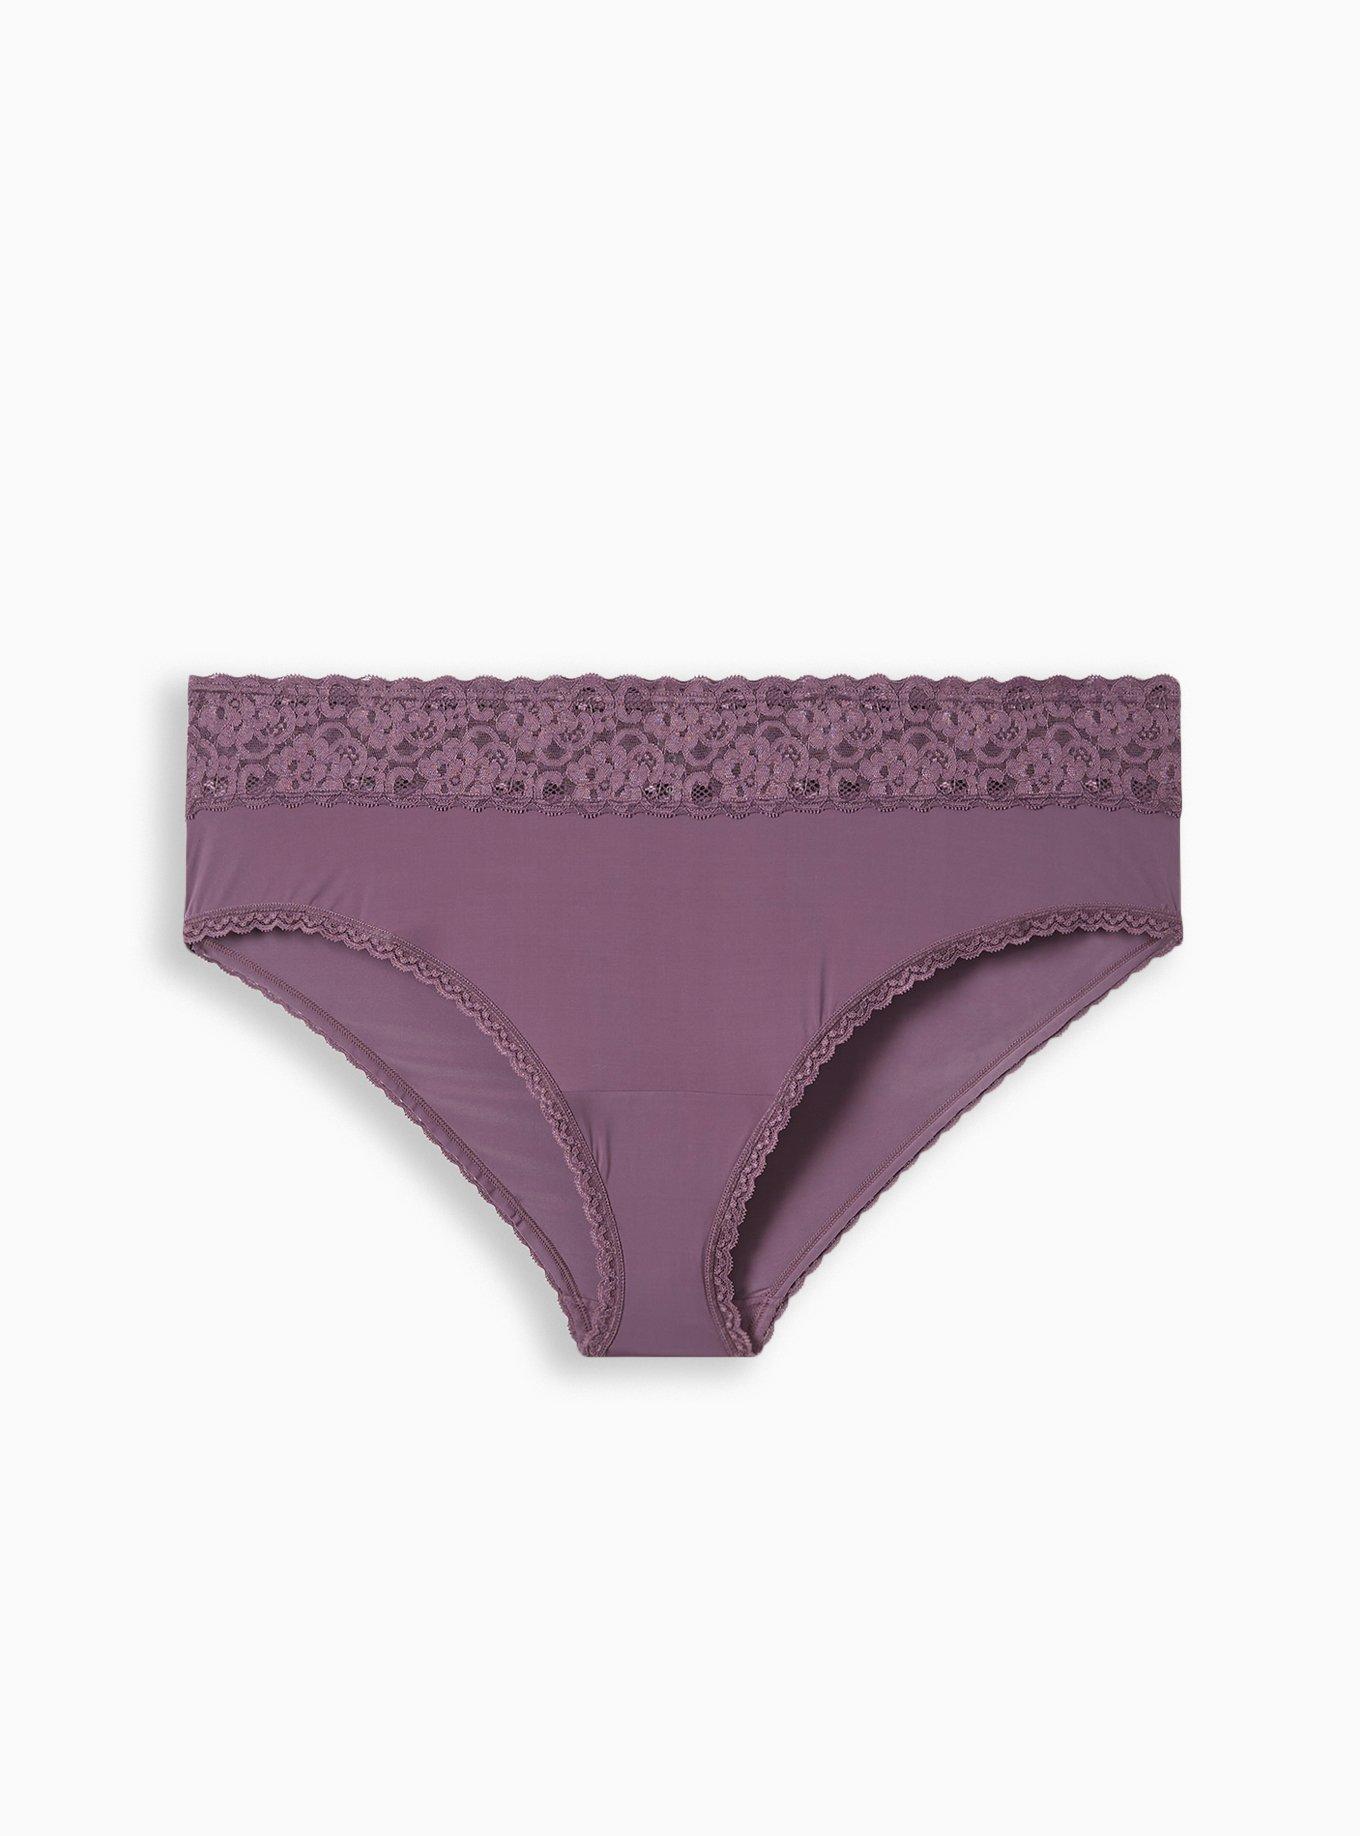 SK Fashion Enterprises Women Panty/Women's Sexy Underwear Panties